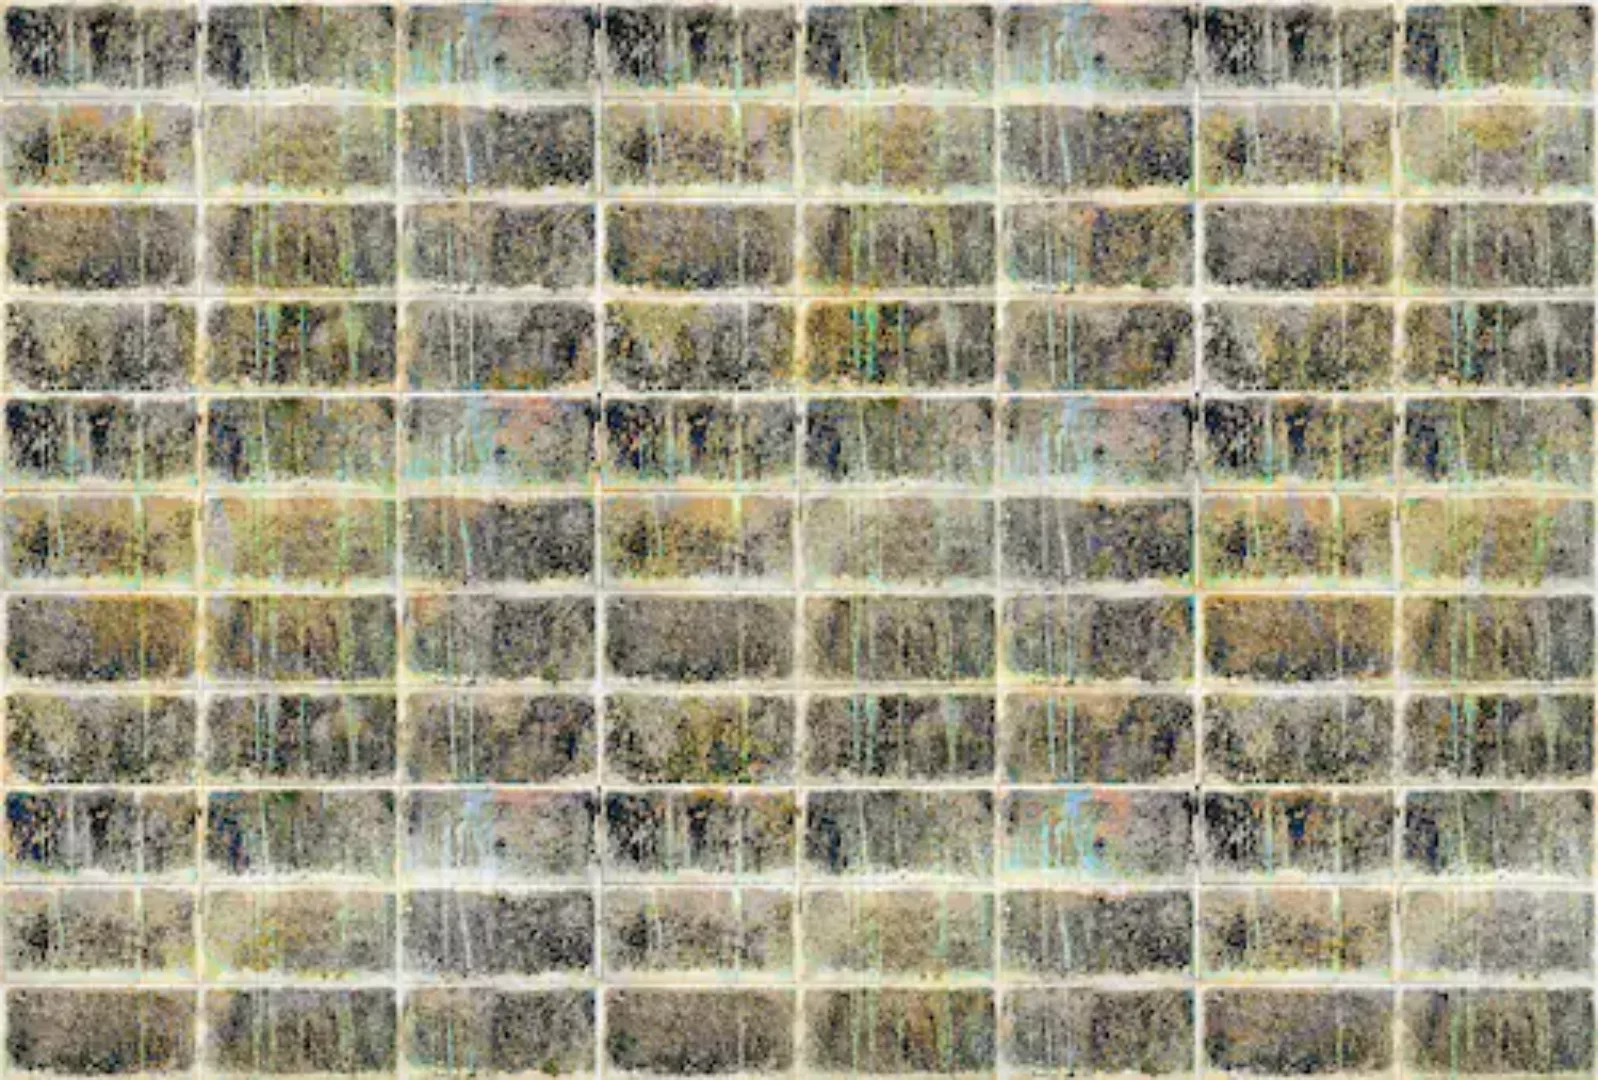 living walls Fototapete »Walls by Patel Factory«, Vlies, Wand günstig online kaufen